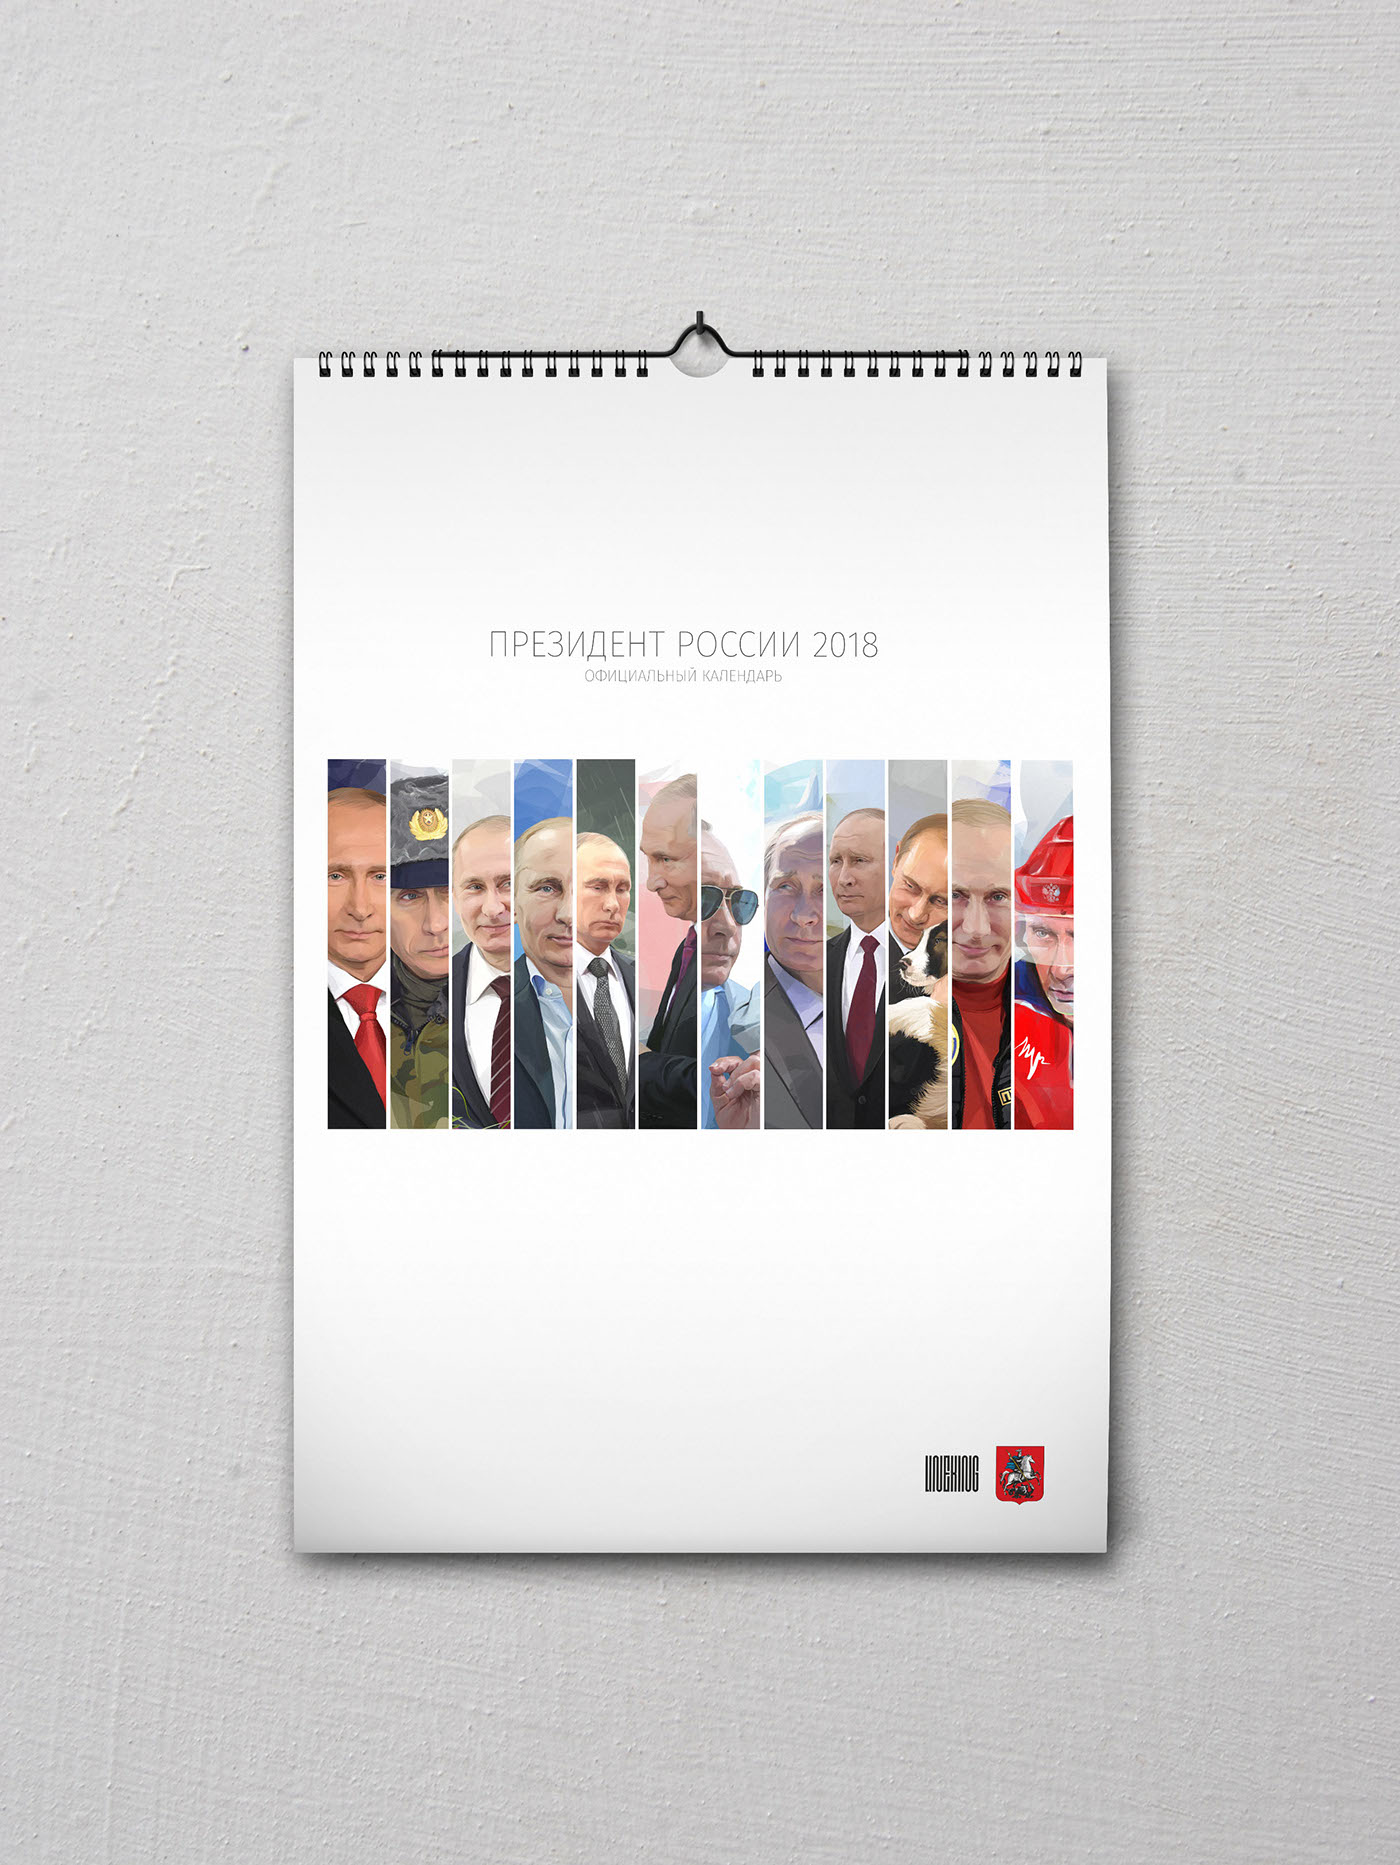 putin russianellection vote president Government Moscow russianfederation calendar vector Lineking